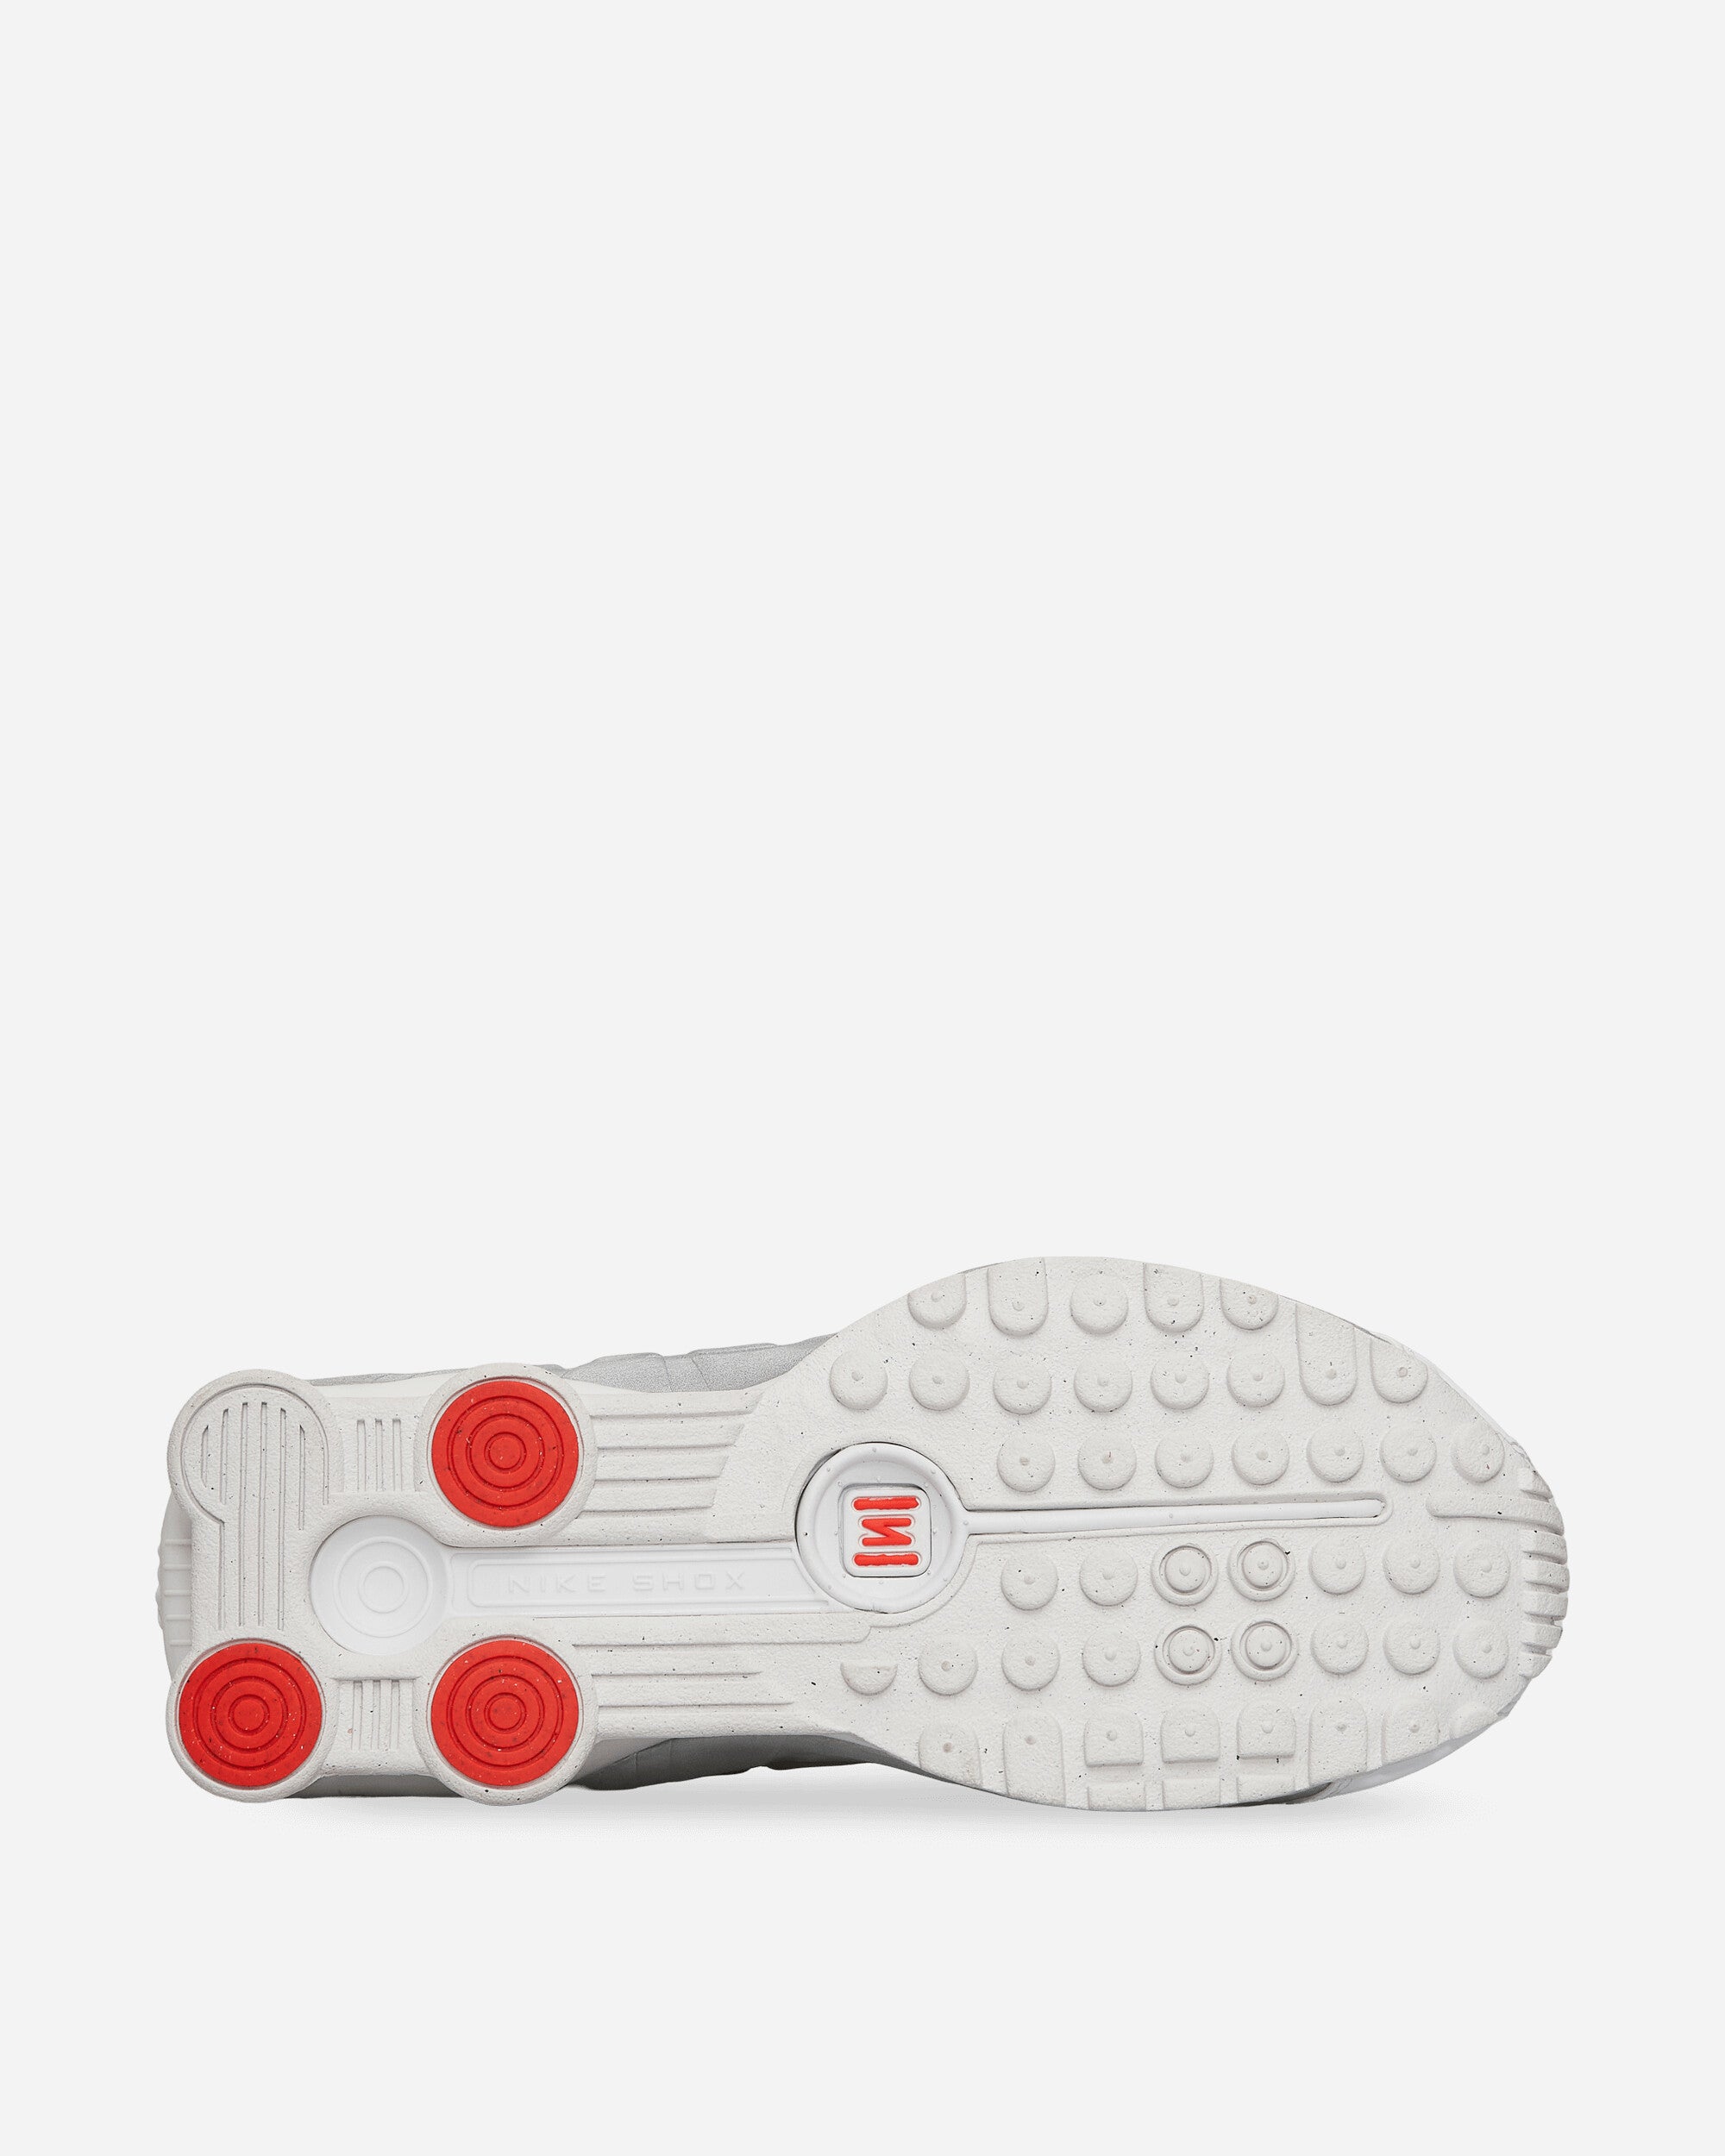 Nike Nike Shox R4 White/White Sneakers Low AR3565-101